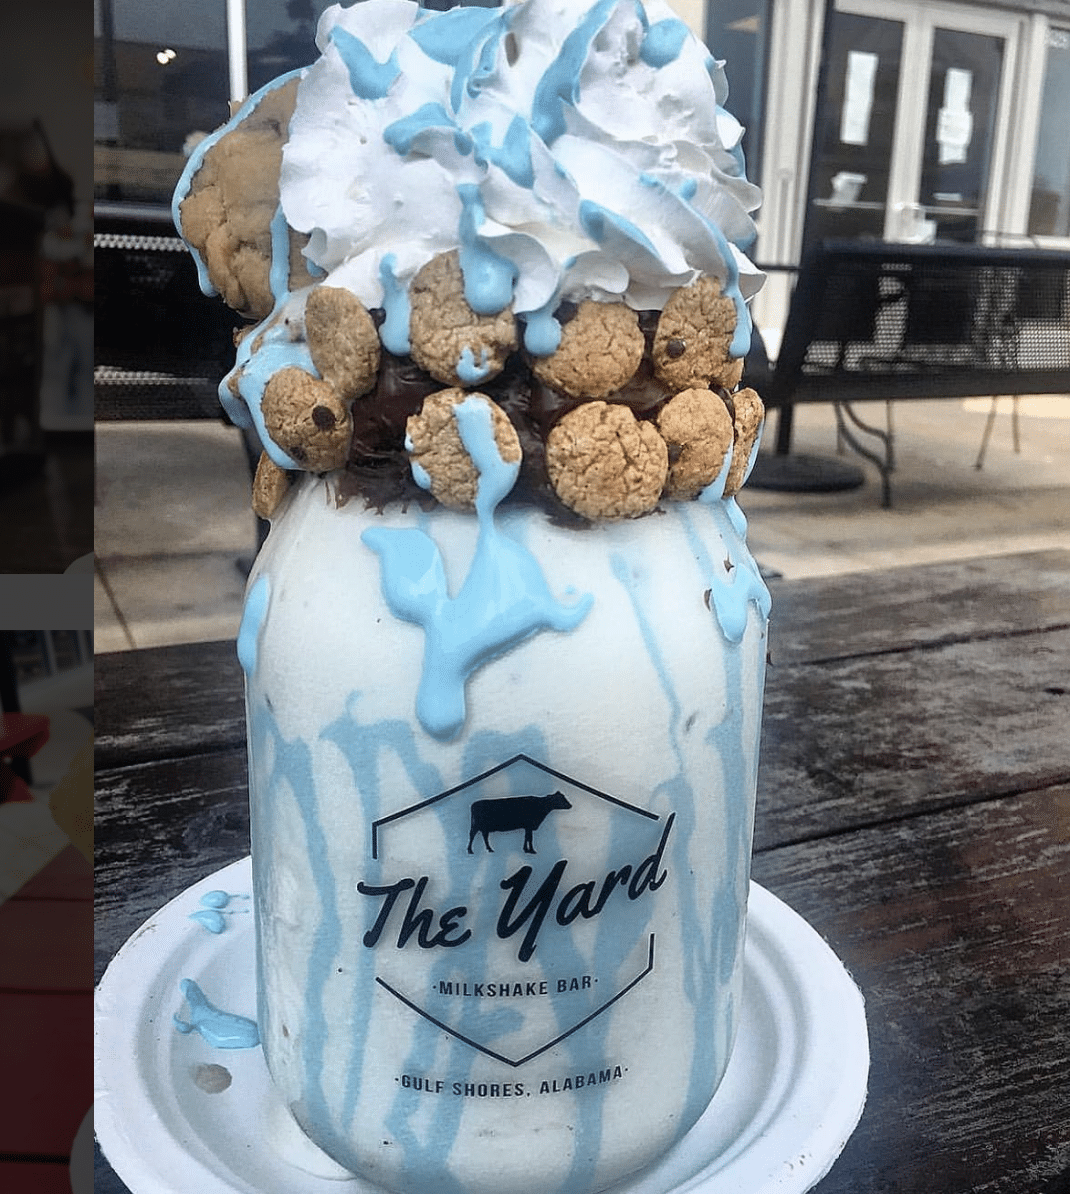 The Cookie Monster at The Yard Milkshake Bar, Panama City Desserts